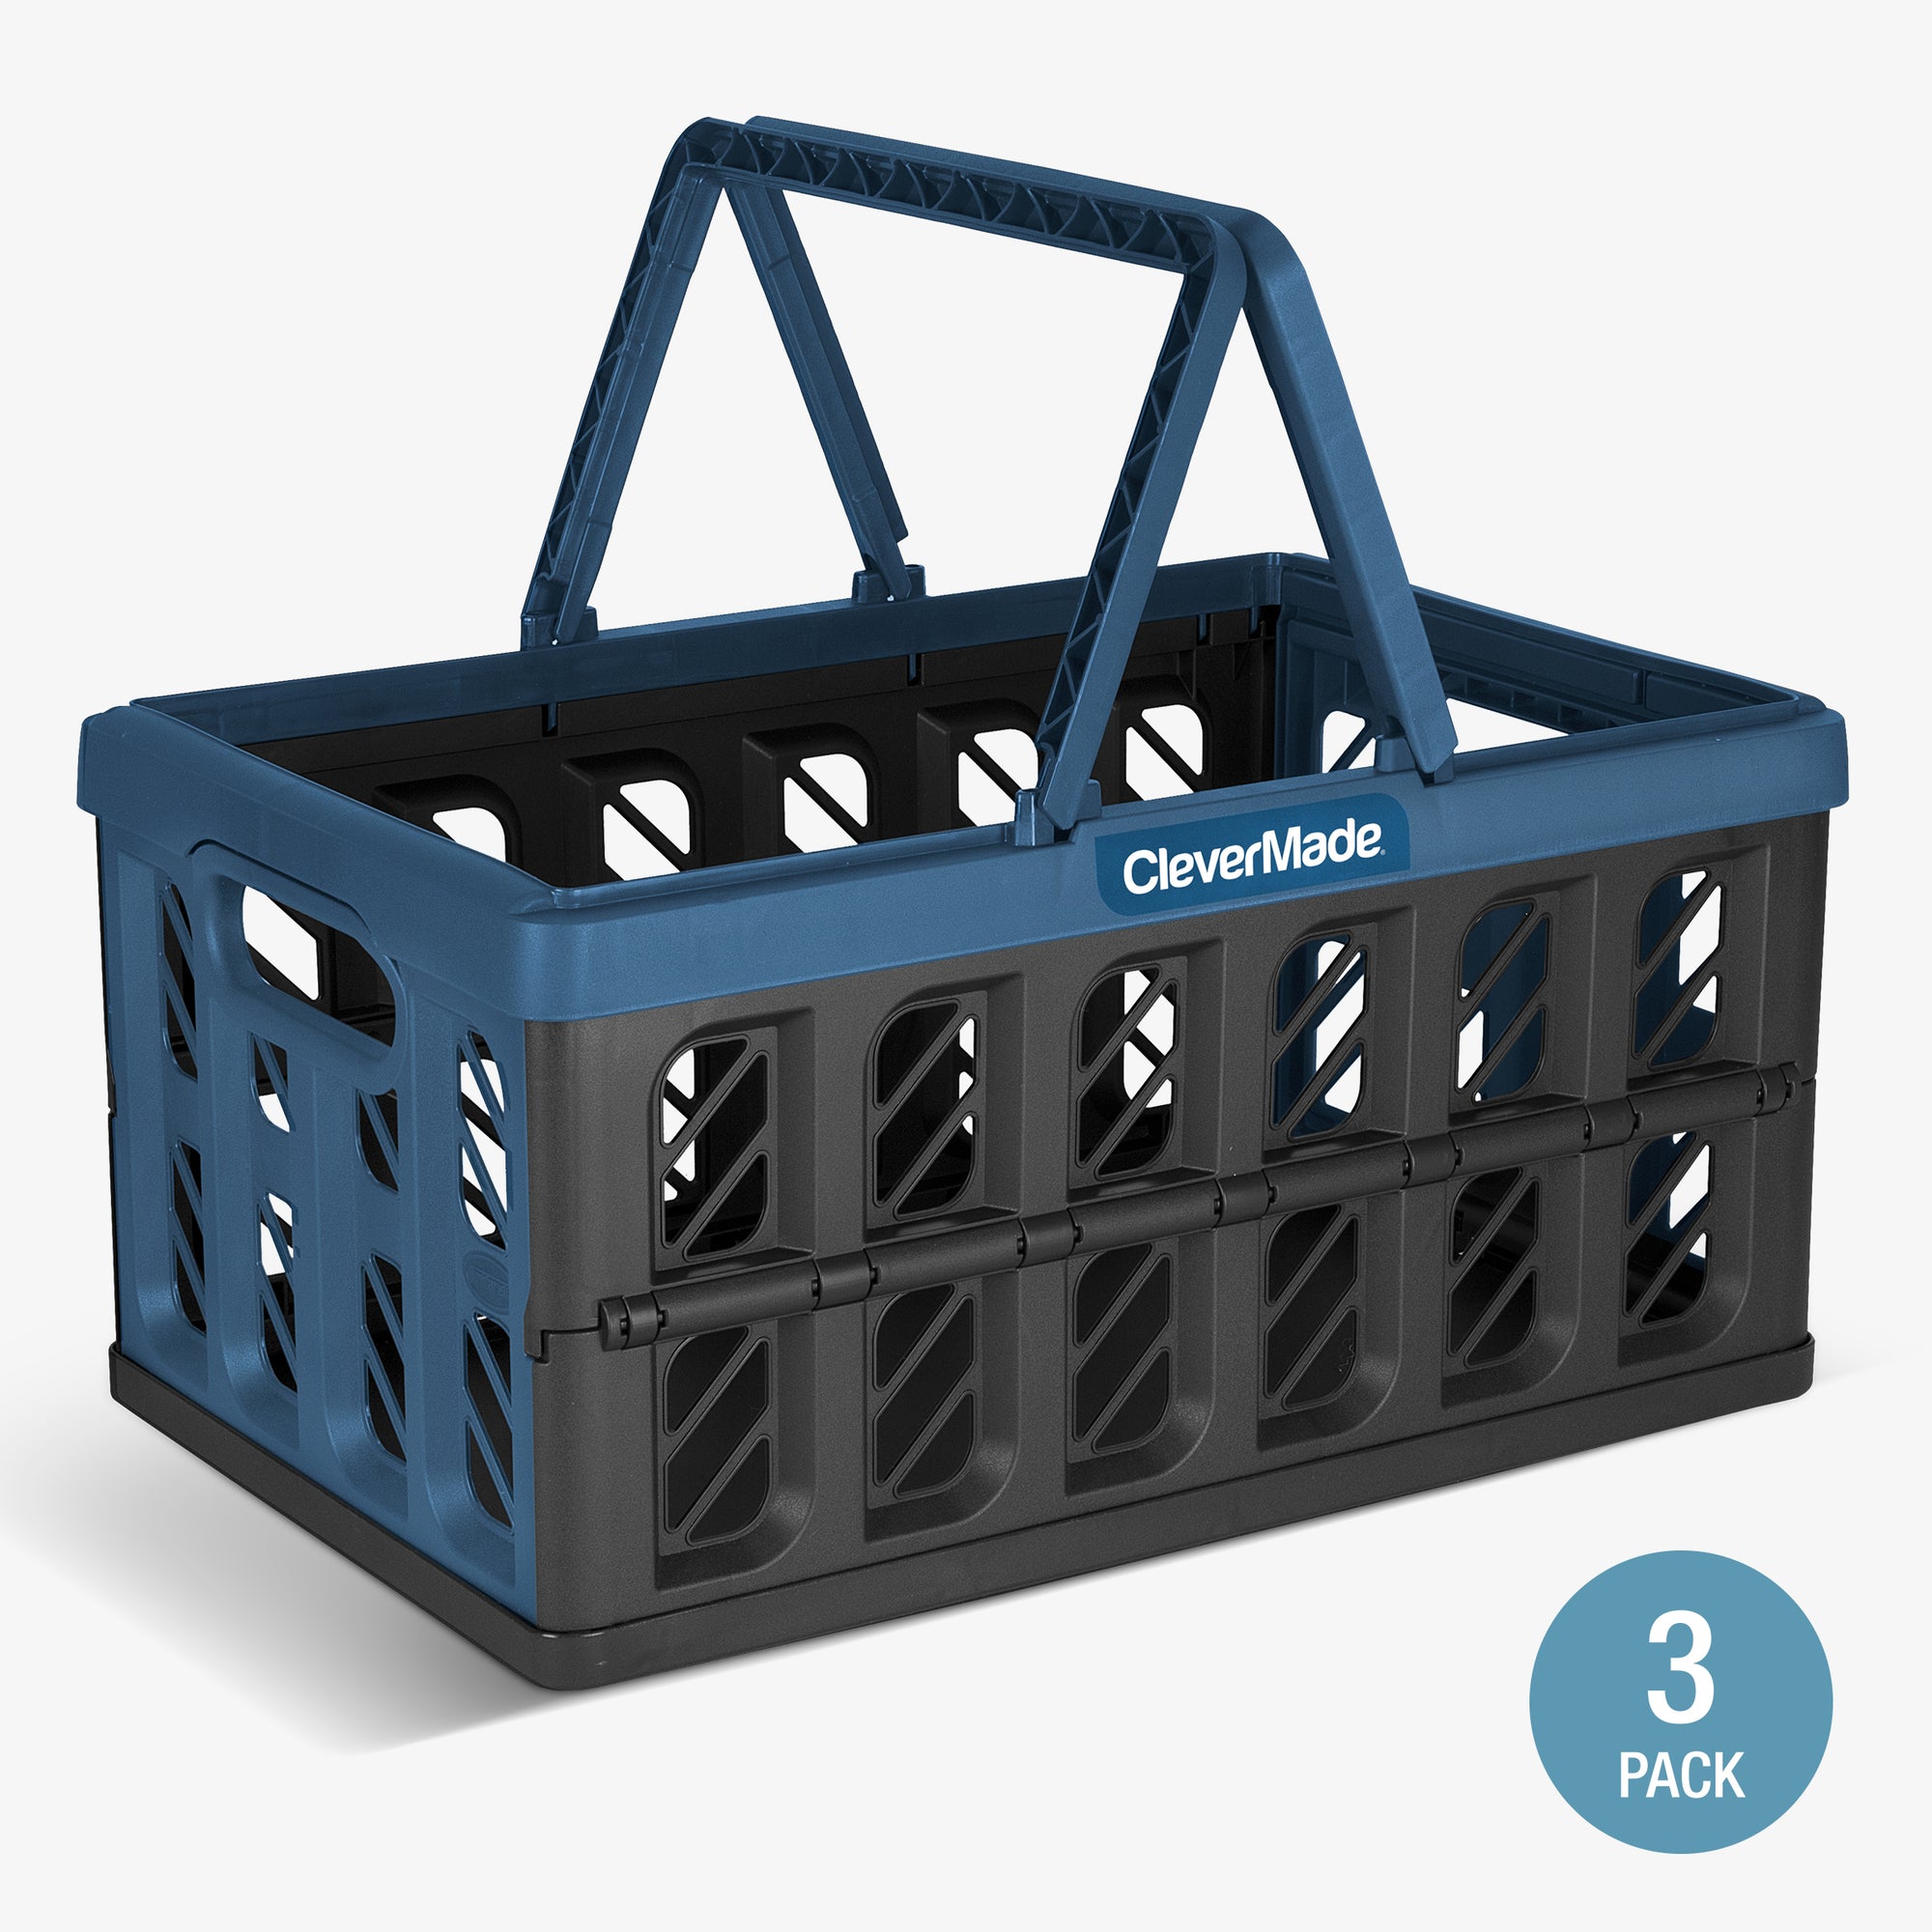 Collapsible Shopping Basket